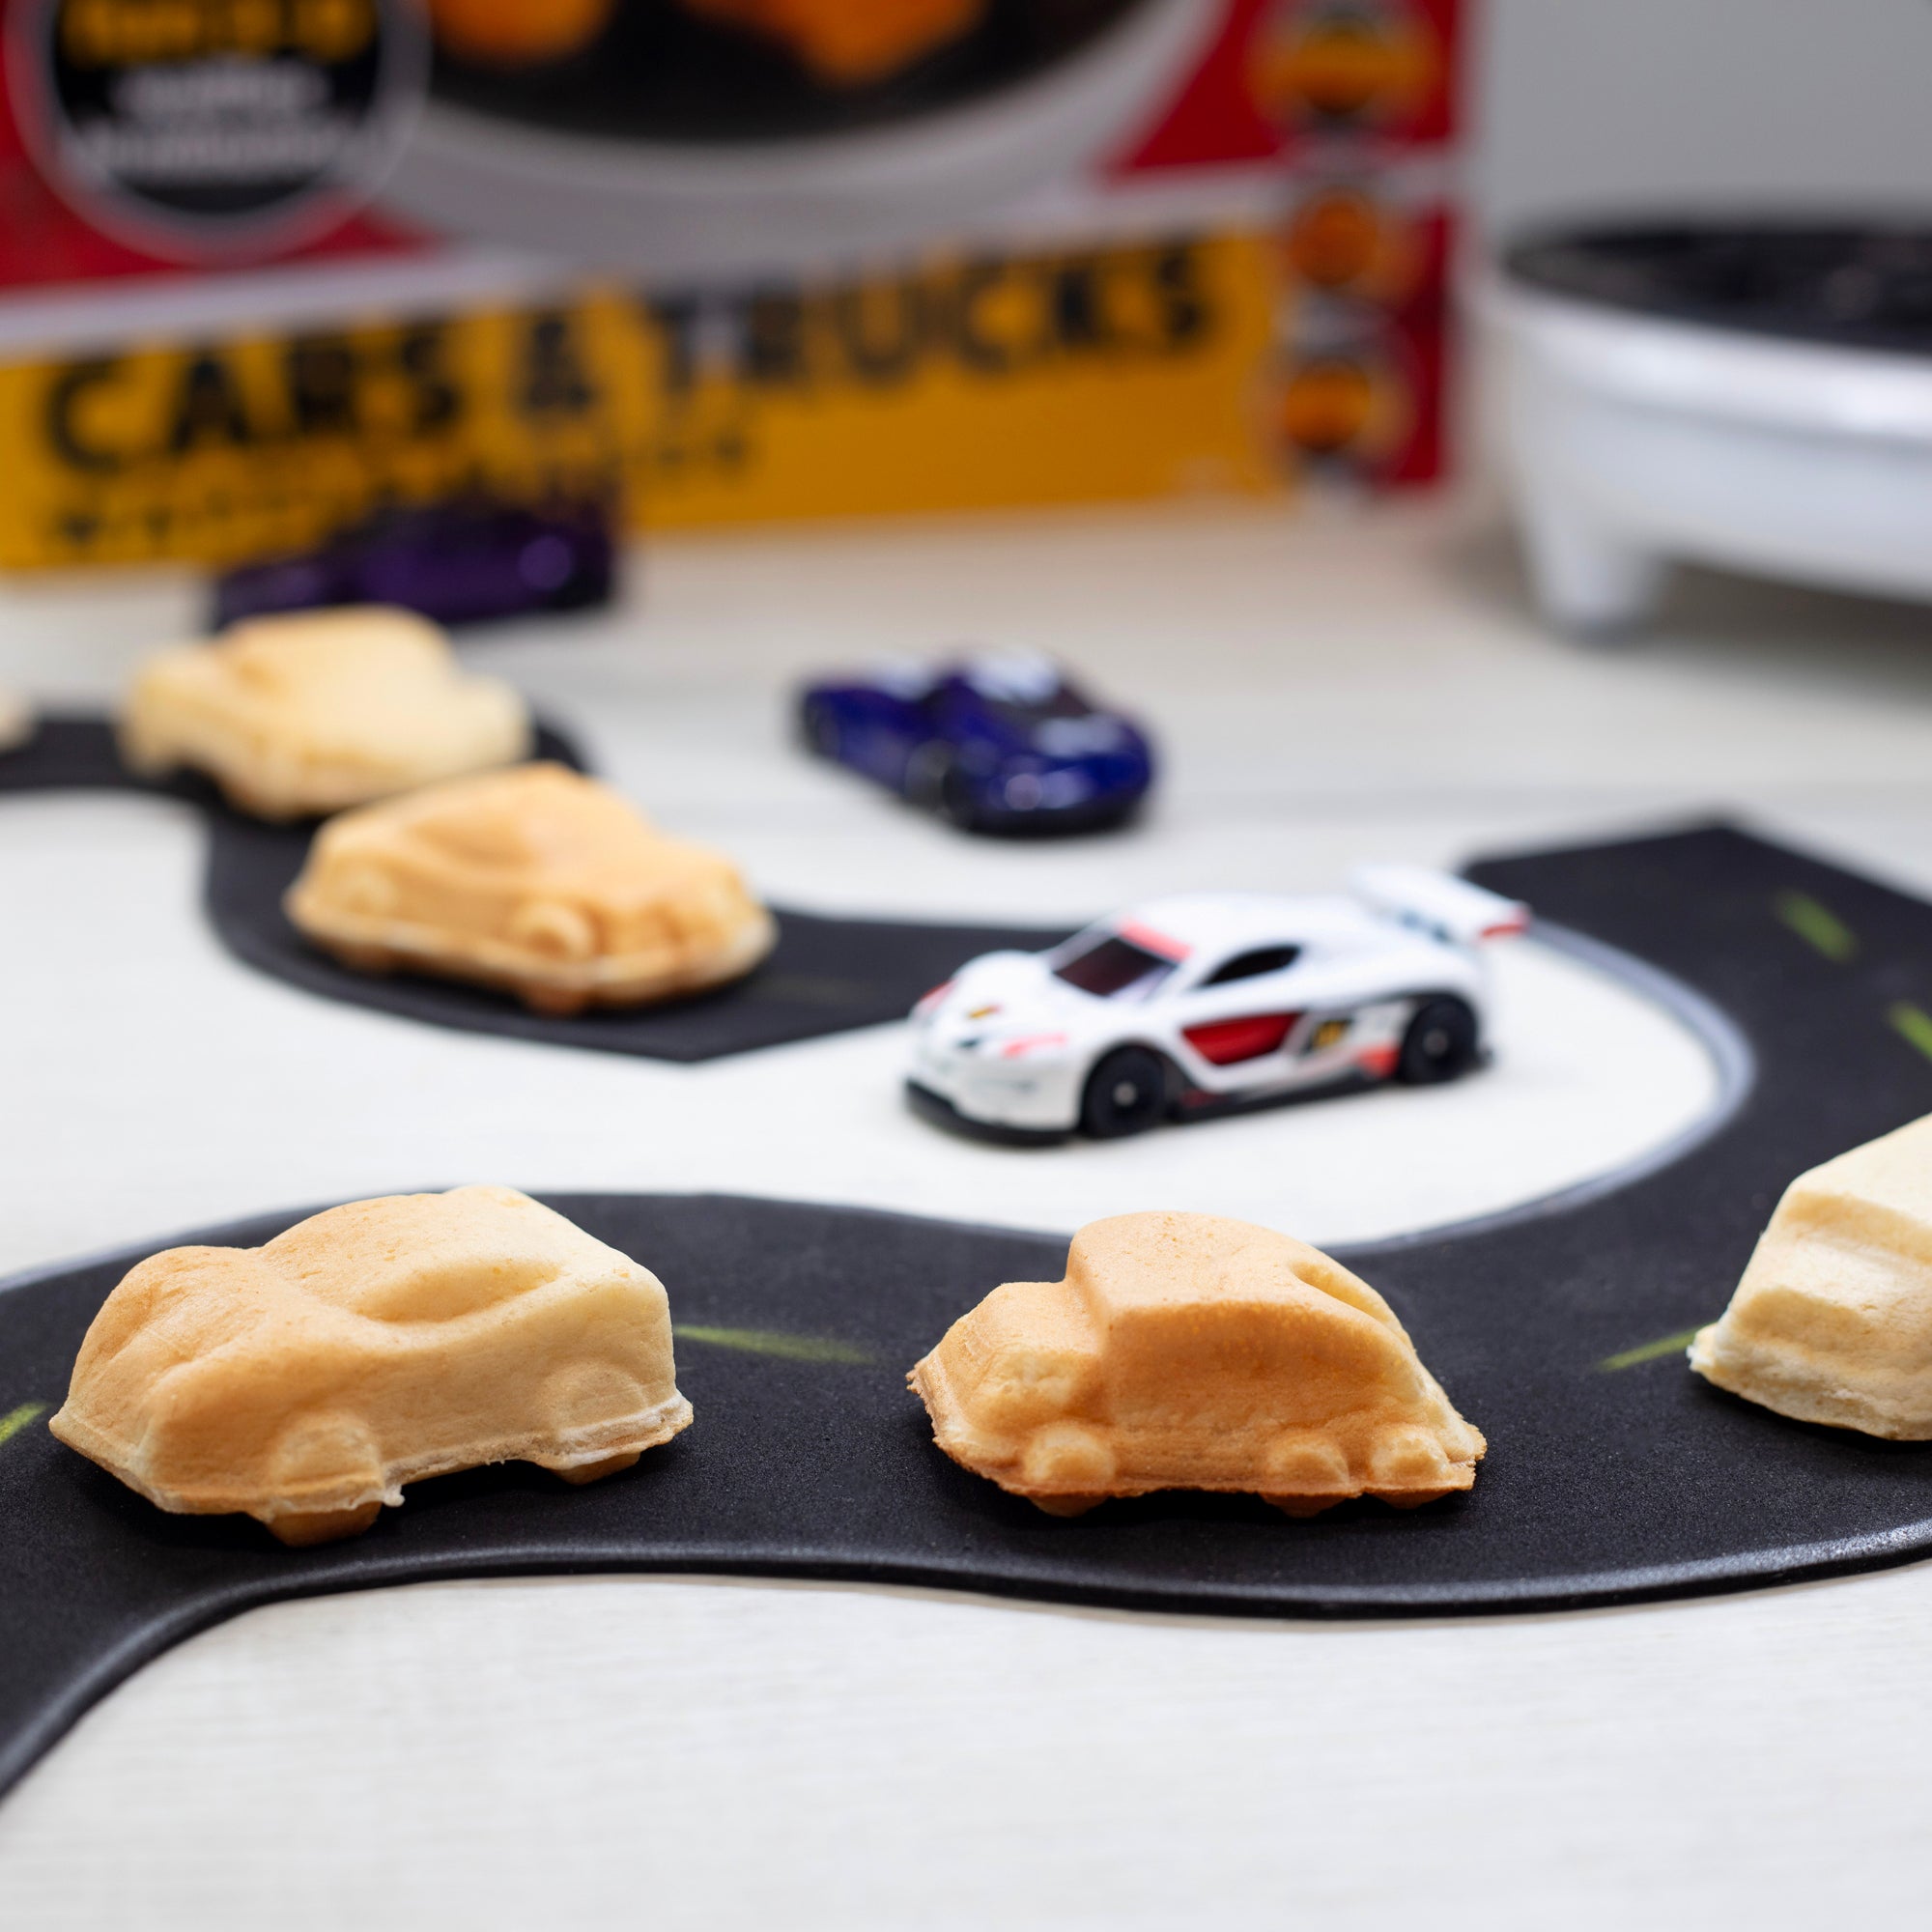 Car Mini Waffle Maker - Make 7 Fun, Different Race Cars, Trucks, and Automobile